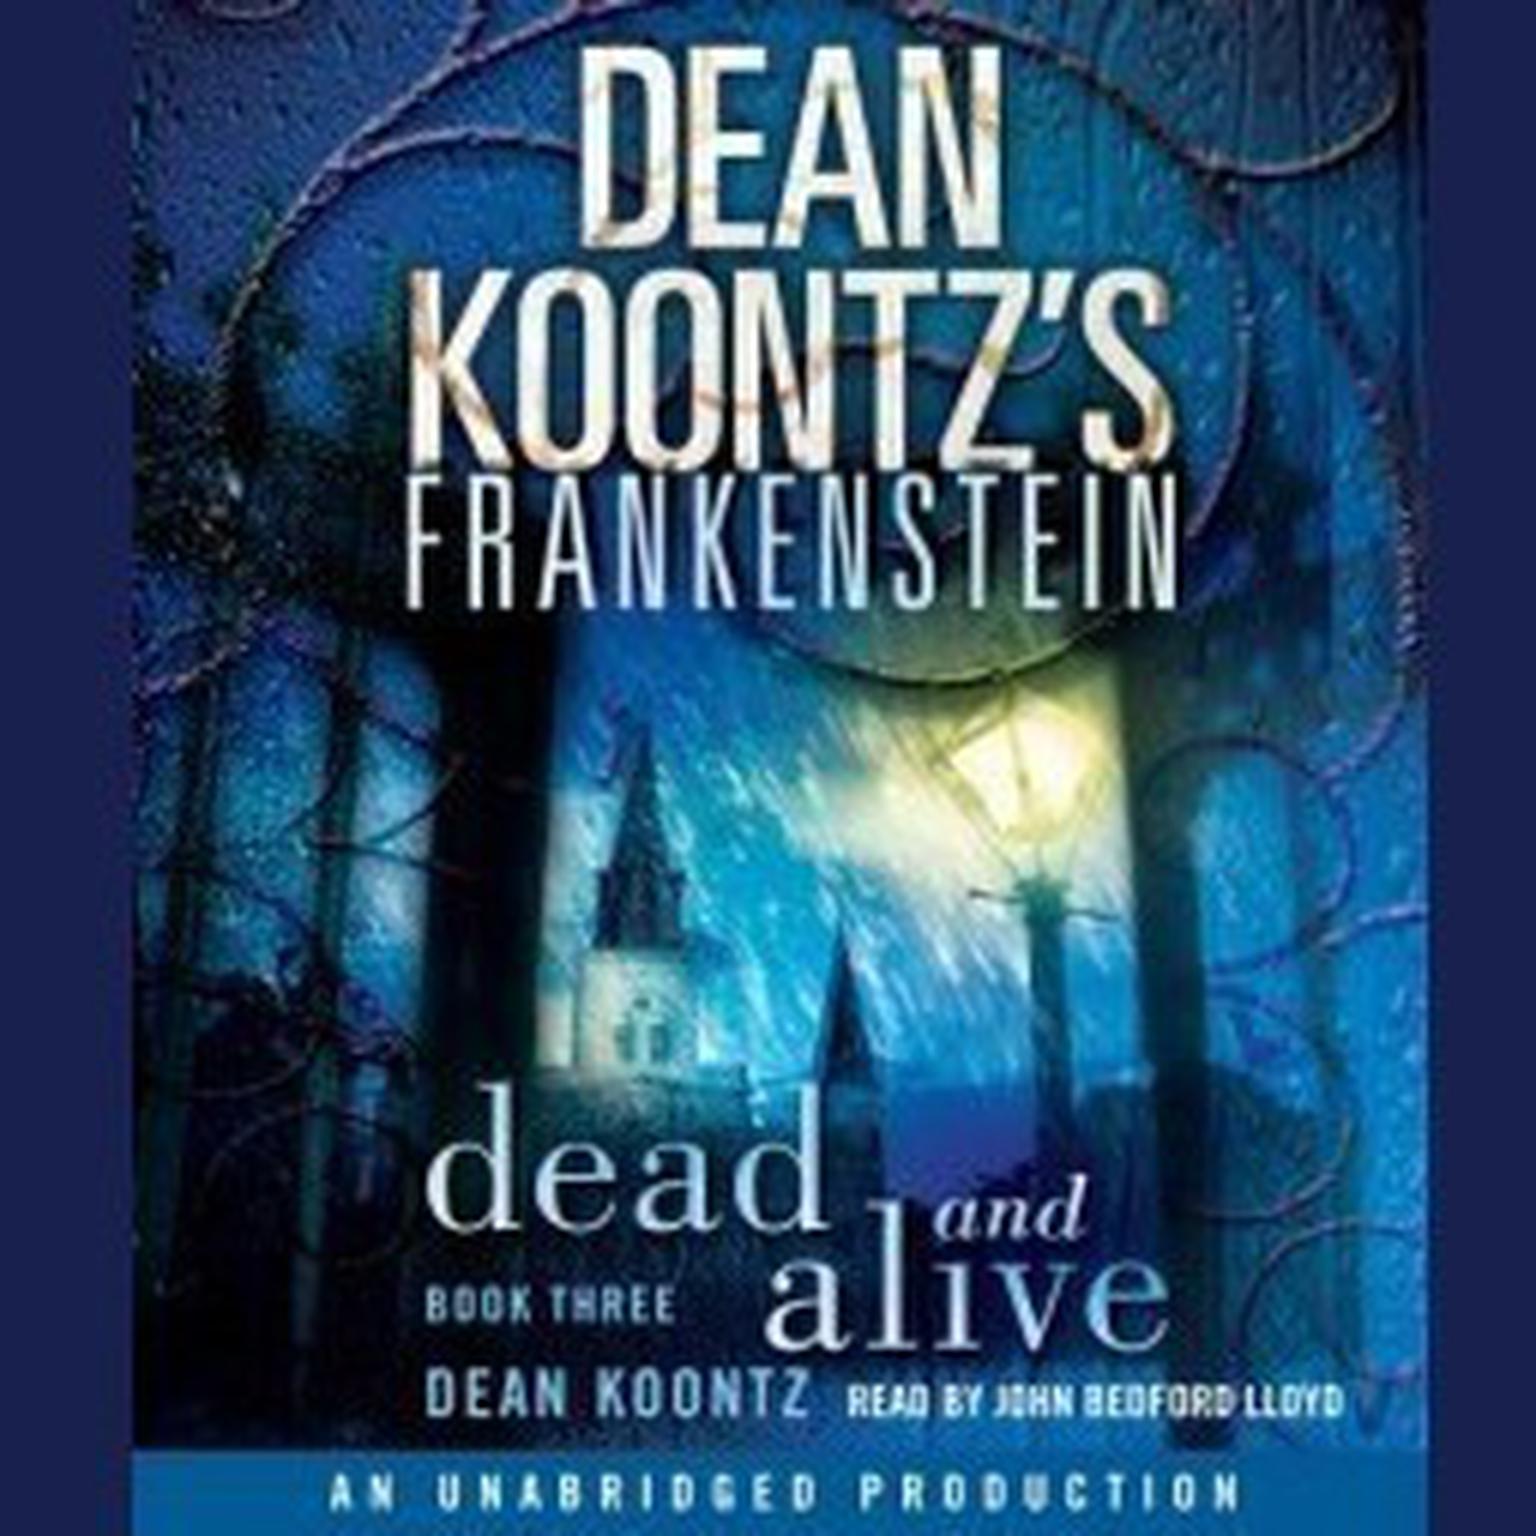 Dean Koontzs Frankenstein: Dead and Alive: A Novel Audiobook, by Dean Koontz